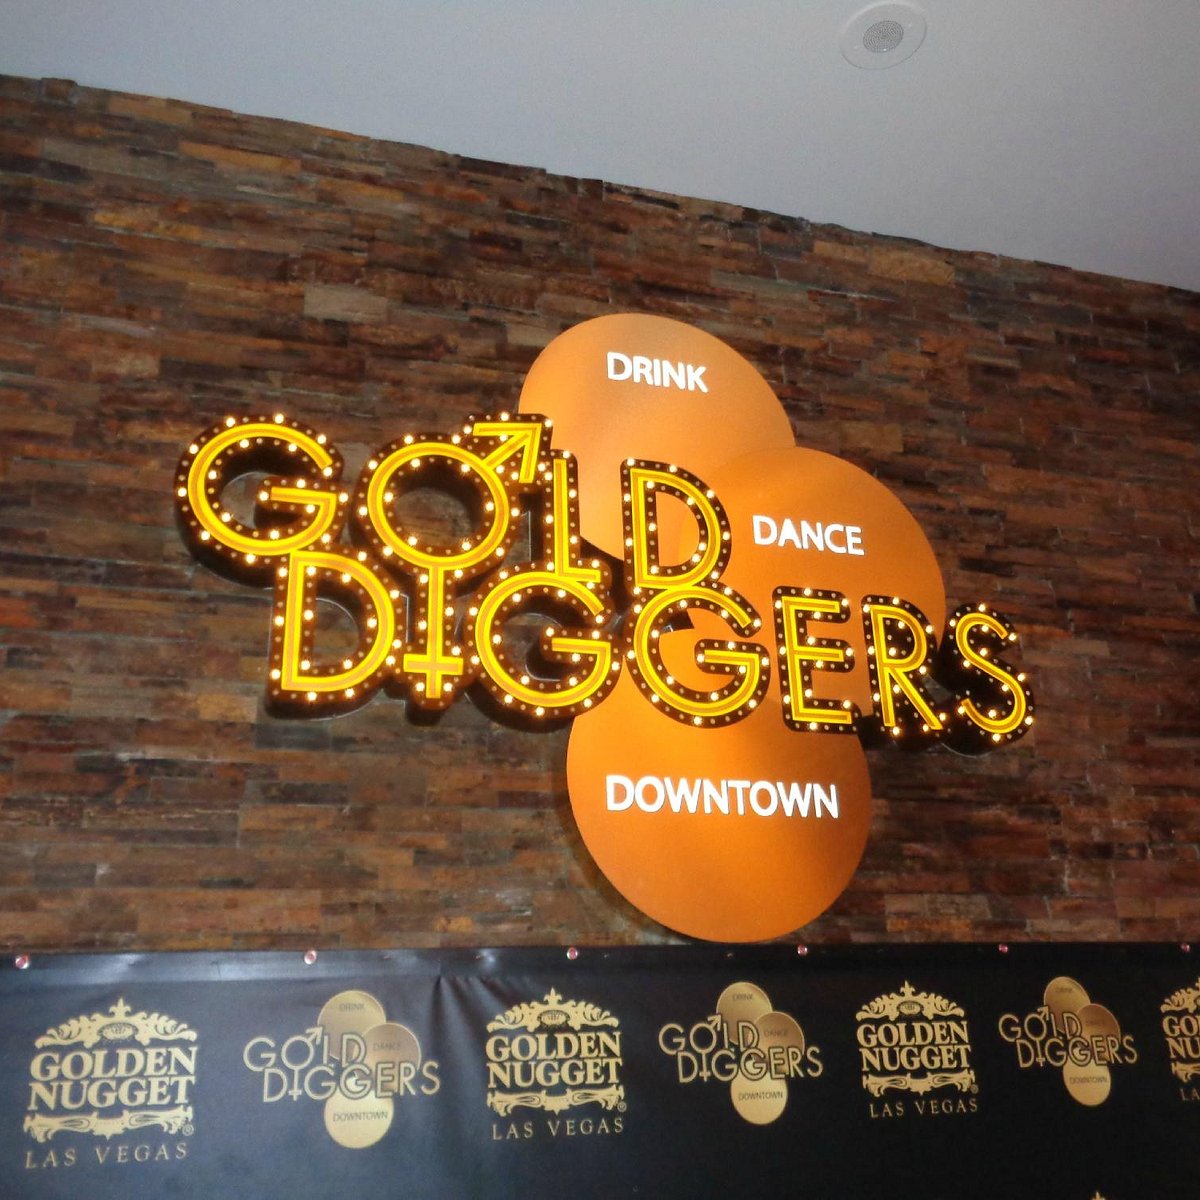 Gold Diggers, NightLife